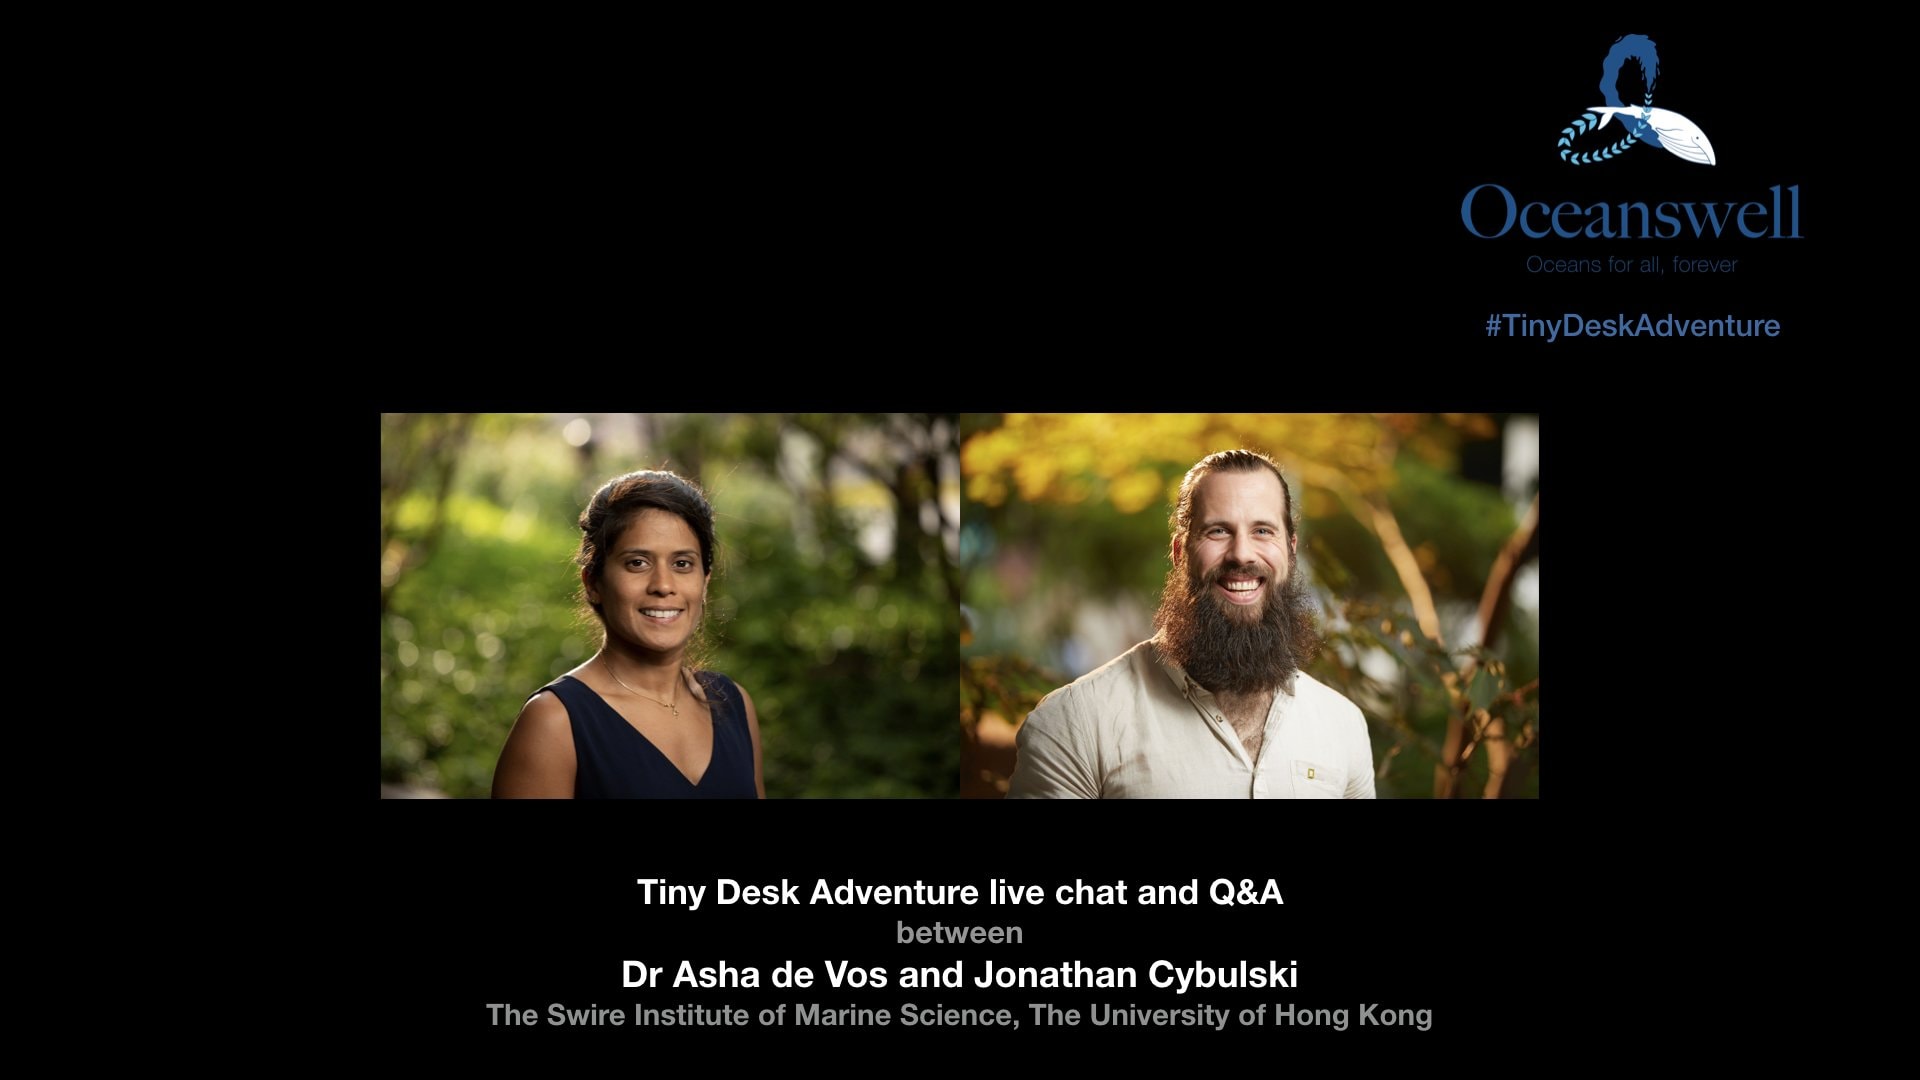 TINY DESK ADVENTURES INSTAGRAM LIVE Q&A WITH DR ASHA DE VOS AND JONATHAN CYBULSKI 1